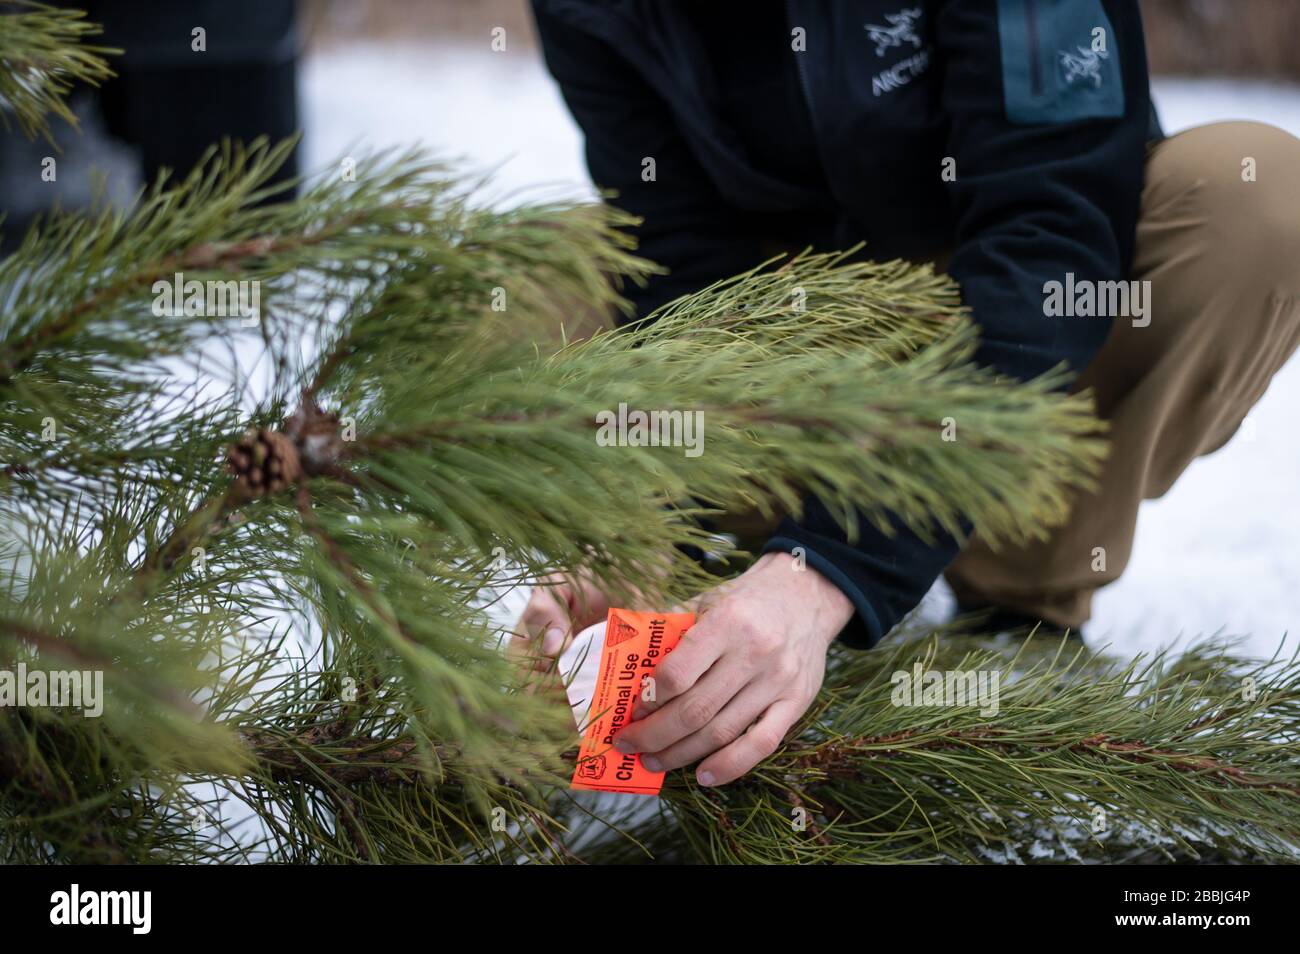 Putting a tag onto a freshly cut Christmas tree. Stock Photo